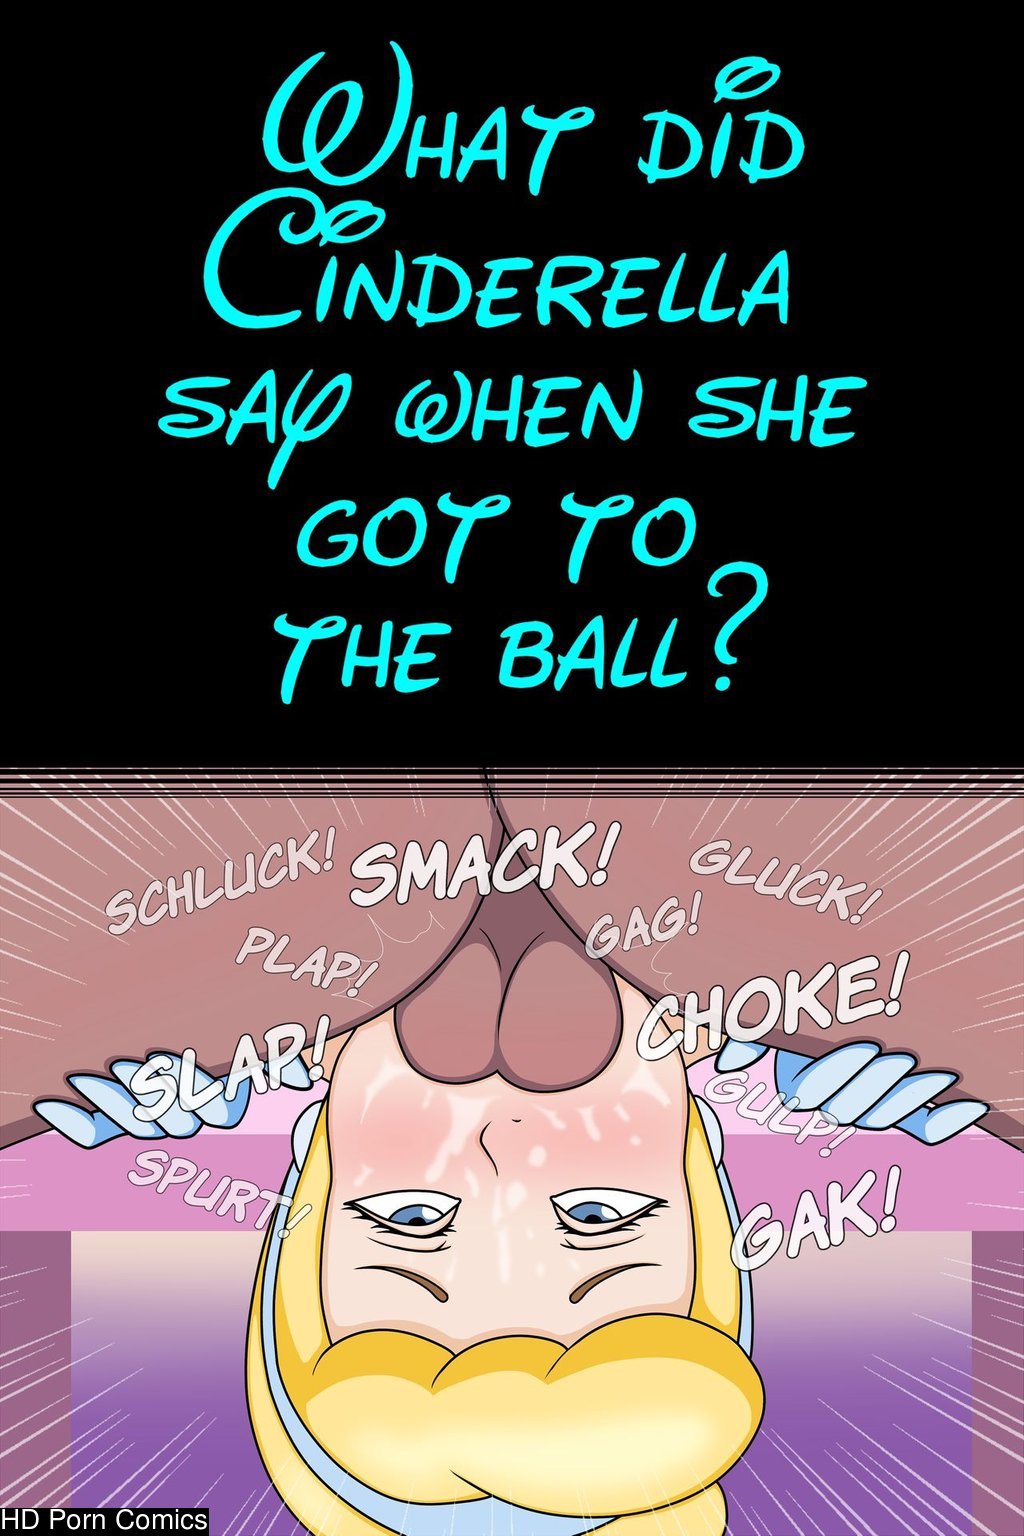 Anime Shemale Disney Princess - Disney Princess Lewd Endings comic porn | HD Porn Comics